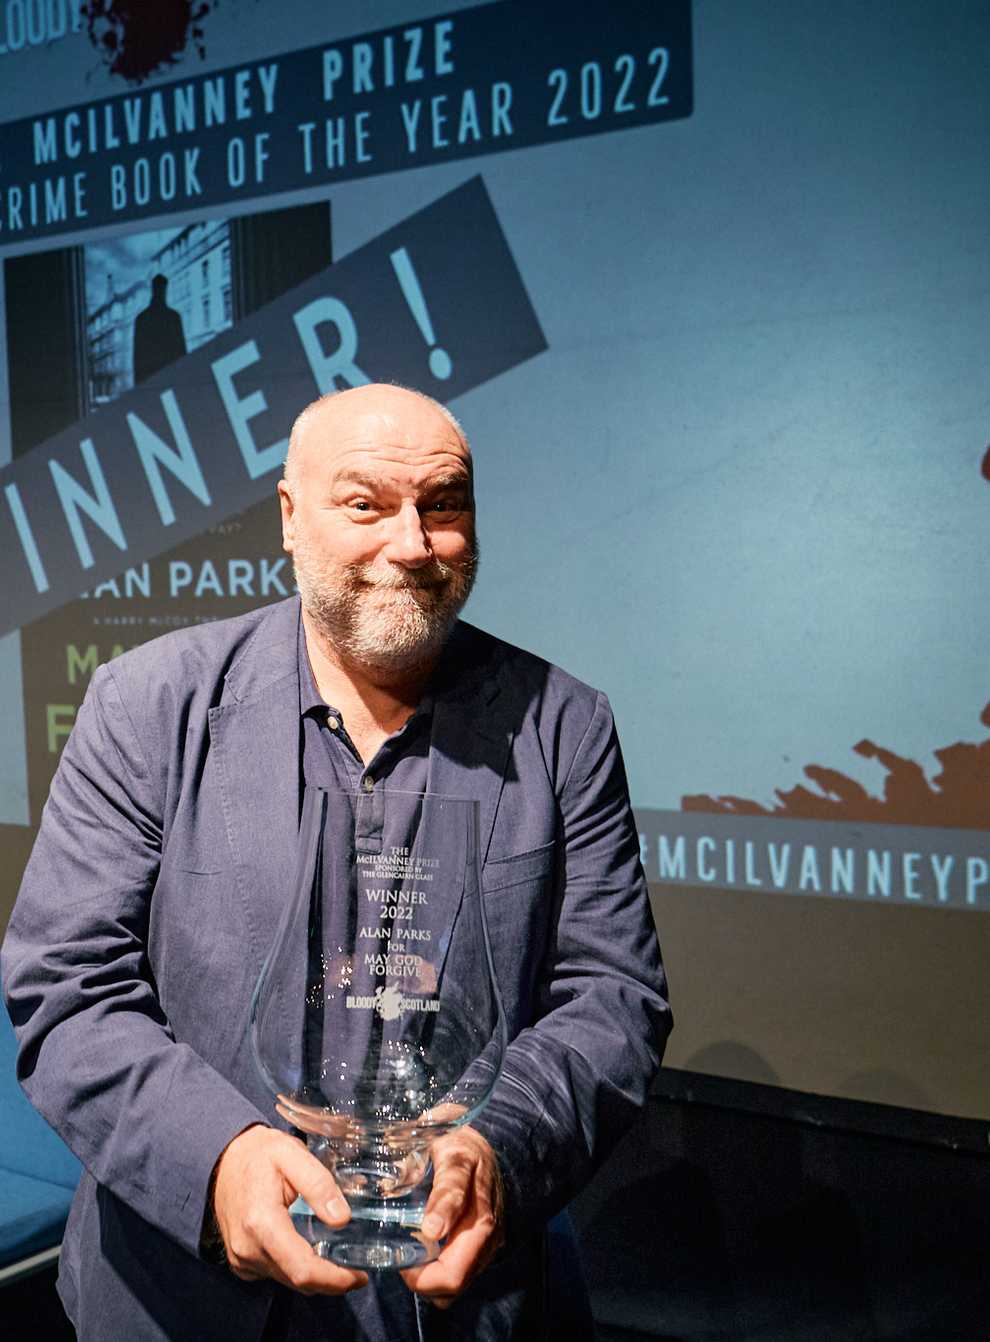 Alan Parks won the award (Paul Reich/Bloody Scotland Festival/PA)